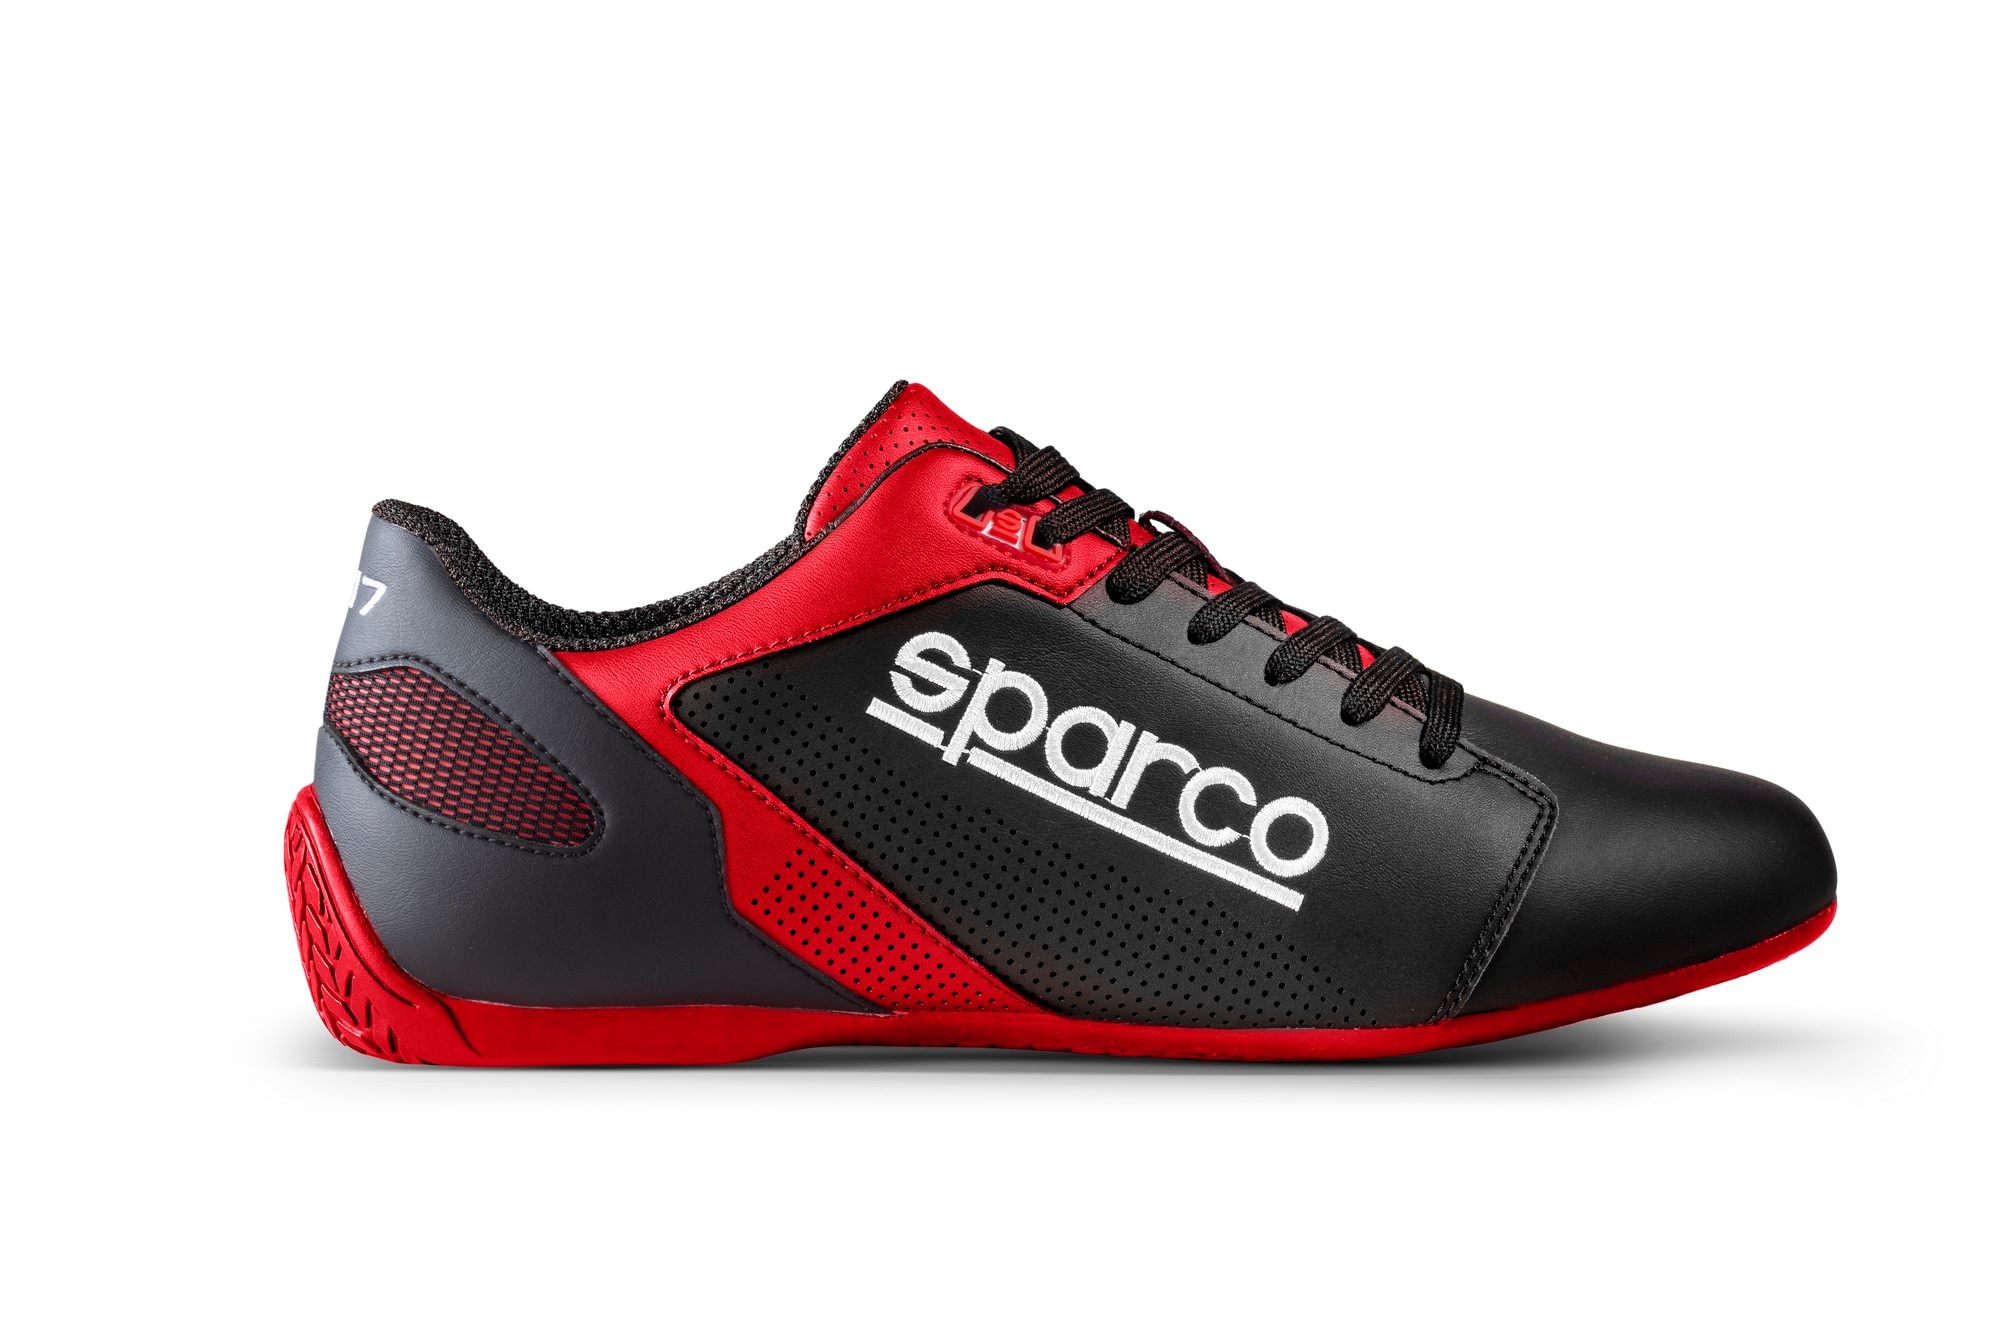 Kengät Sparco SL-17 punainen/musta